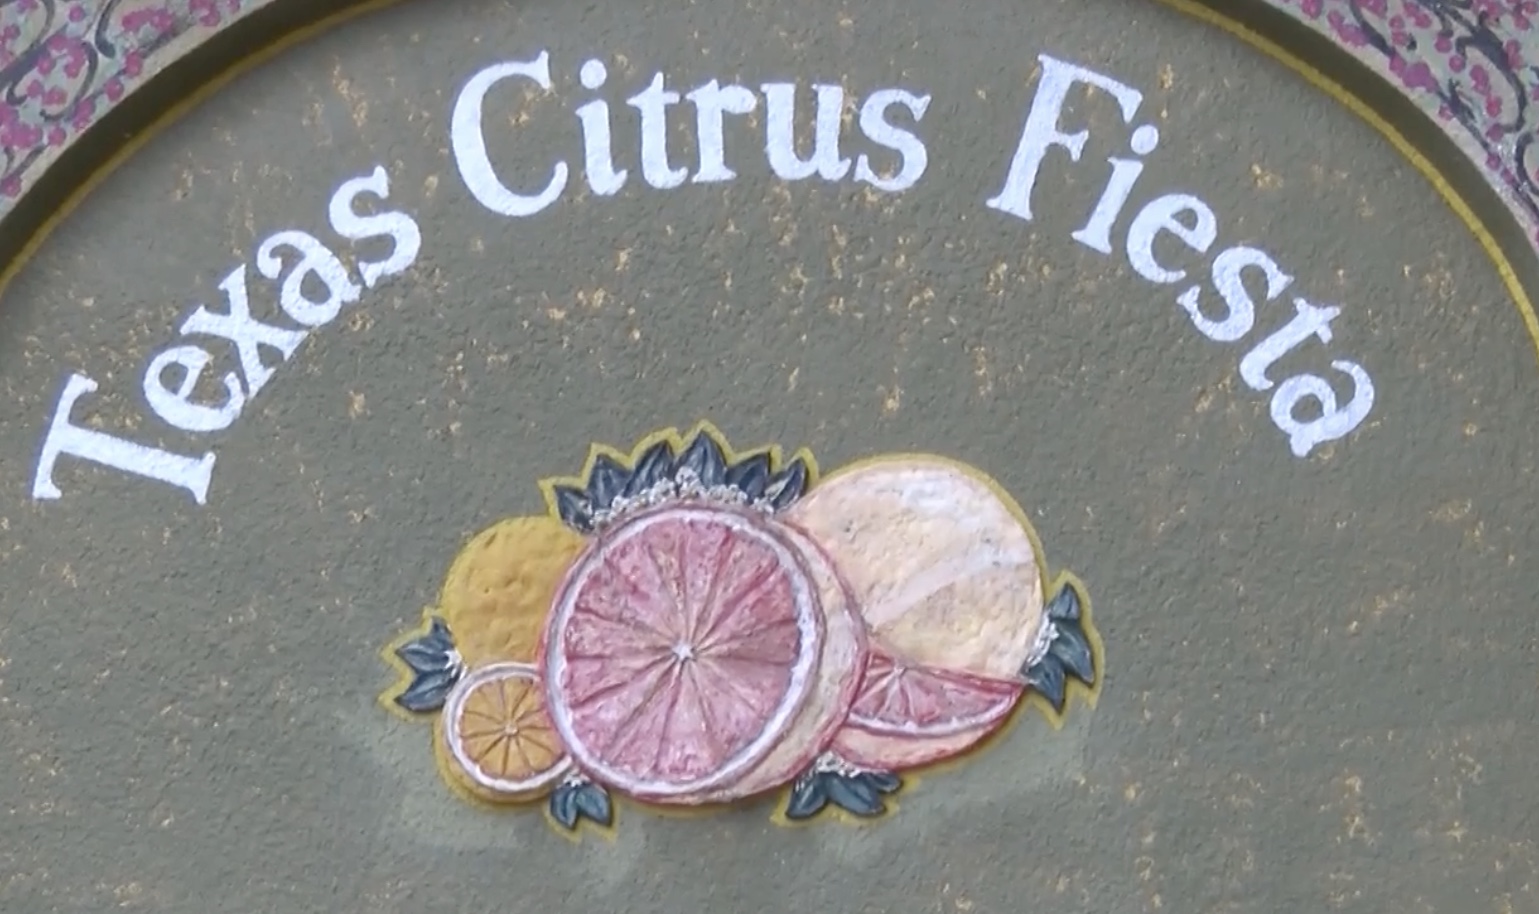 Texas Citrus Fiesta returns for its 90th celebration